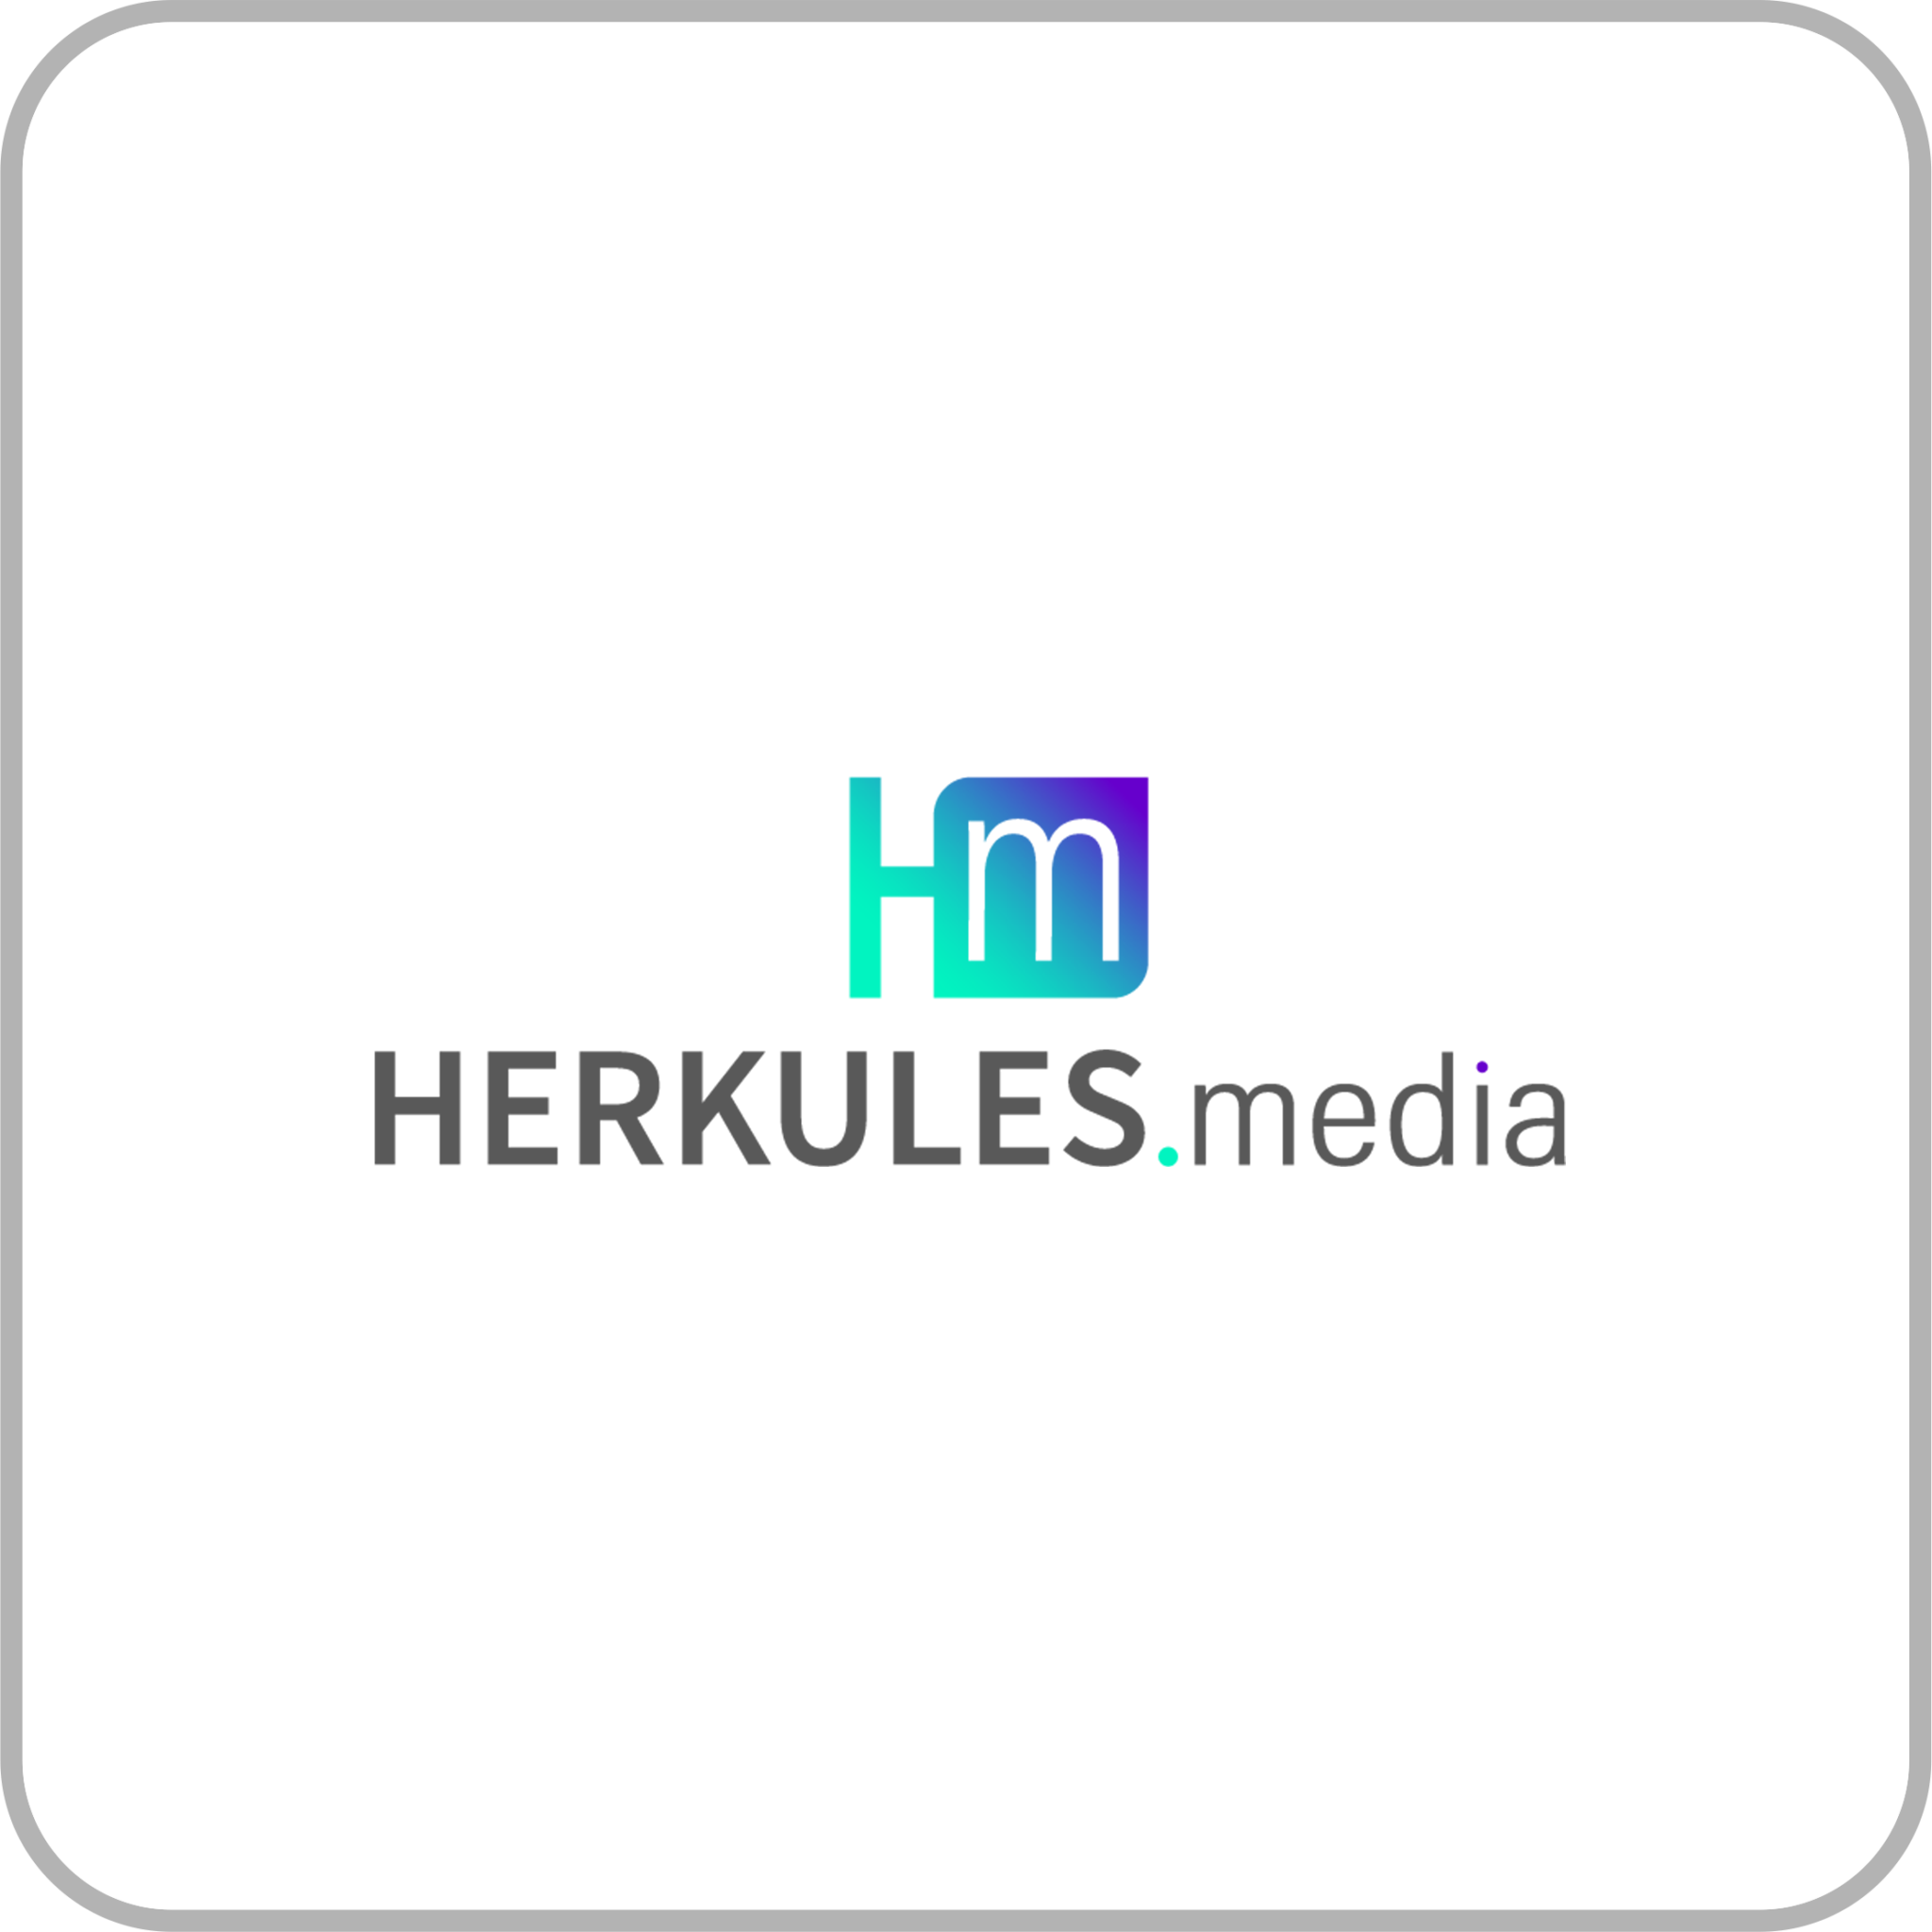 HERKULES.media